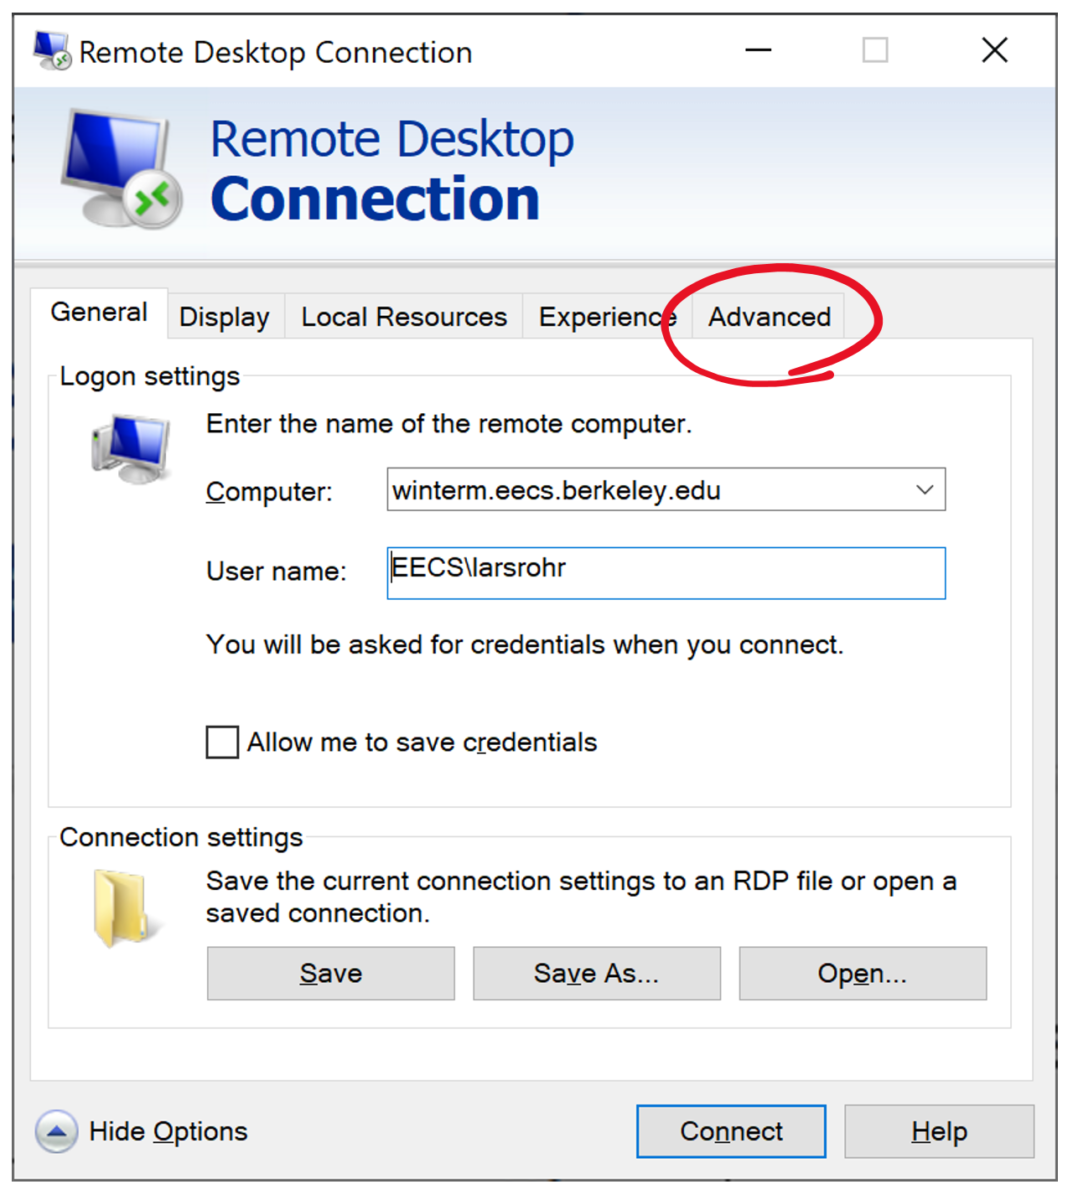 Remote Desktop Connection -- Advanced tab